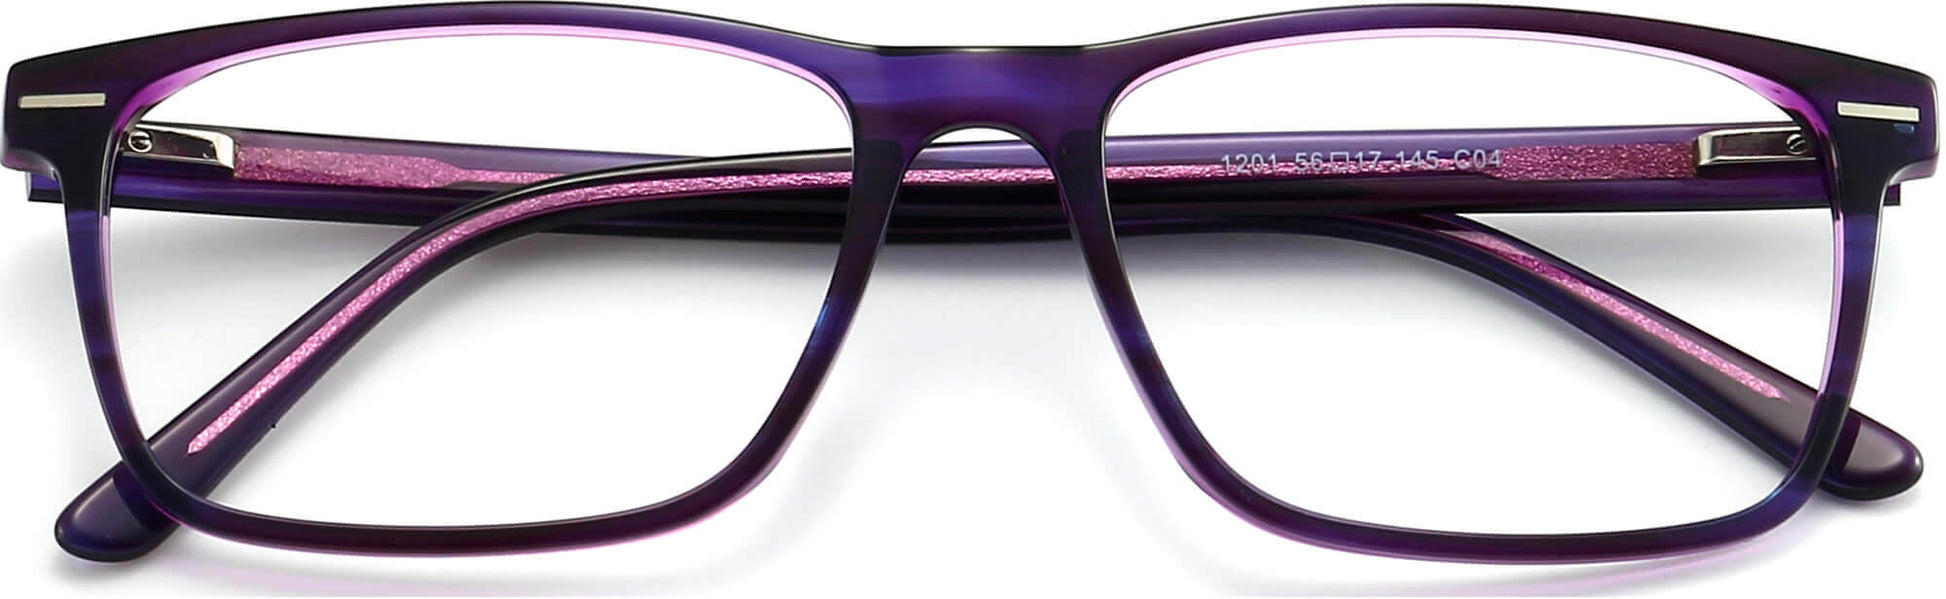 Damla Rectangle Purple Eyeglasses rom ANRRI, closed view